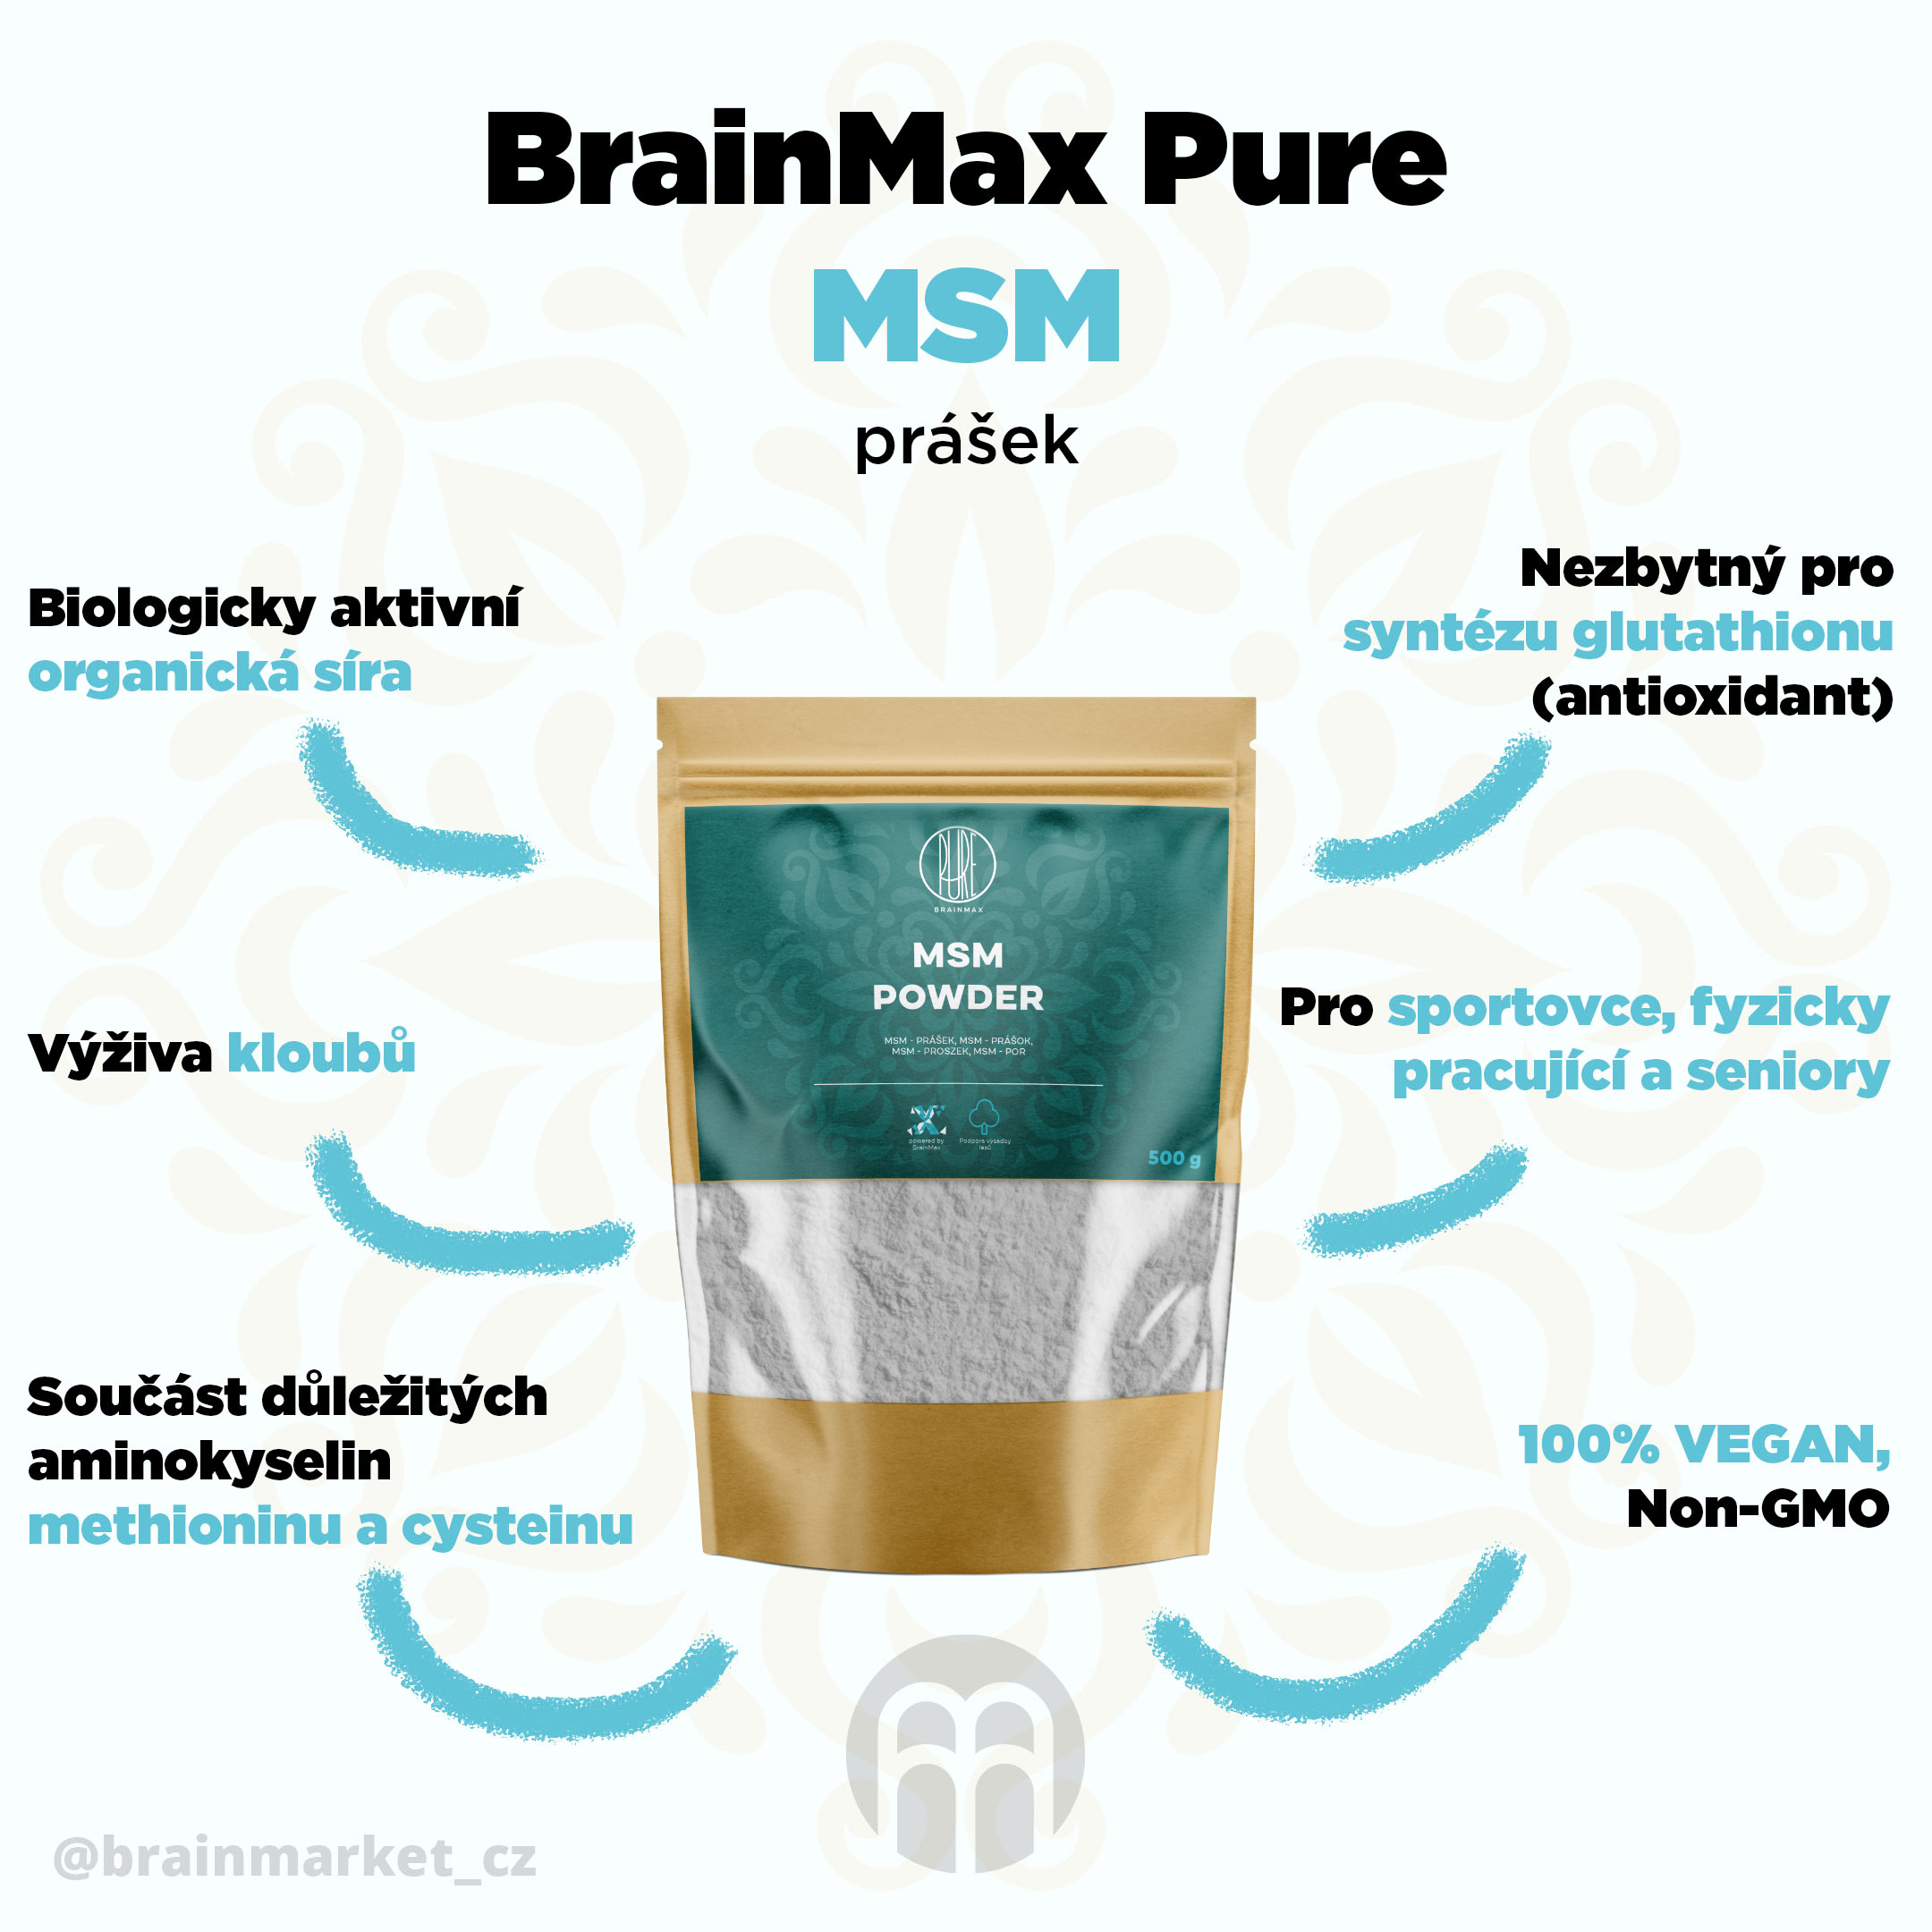 BrainMax Pure MSM BIO prášek, 250 g - BrainMarket.cz